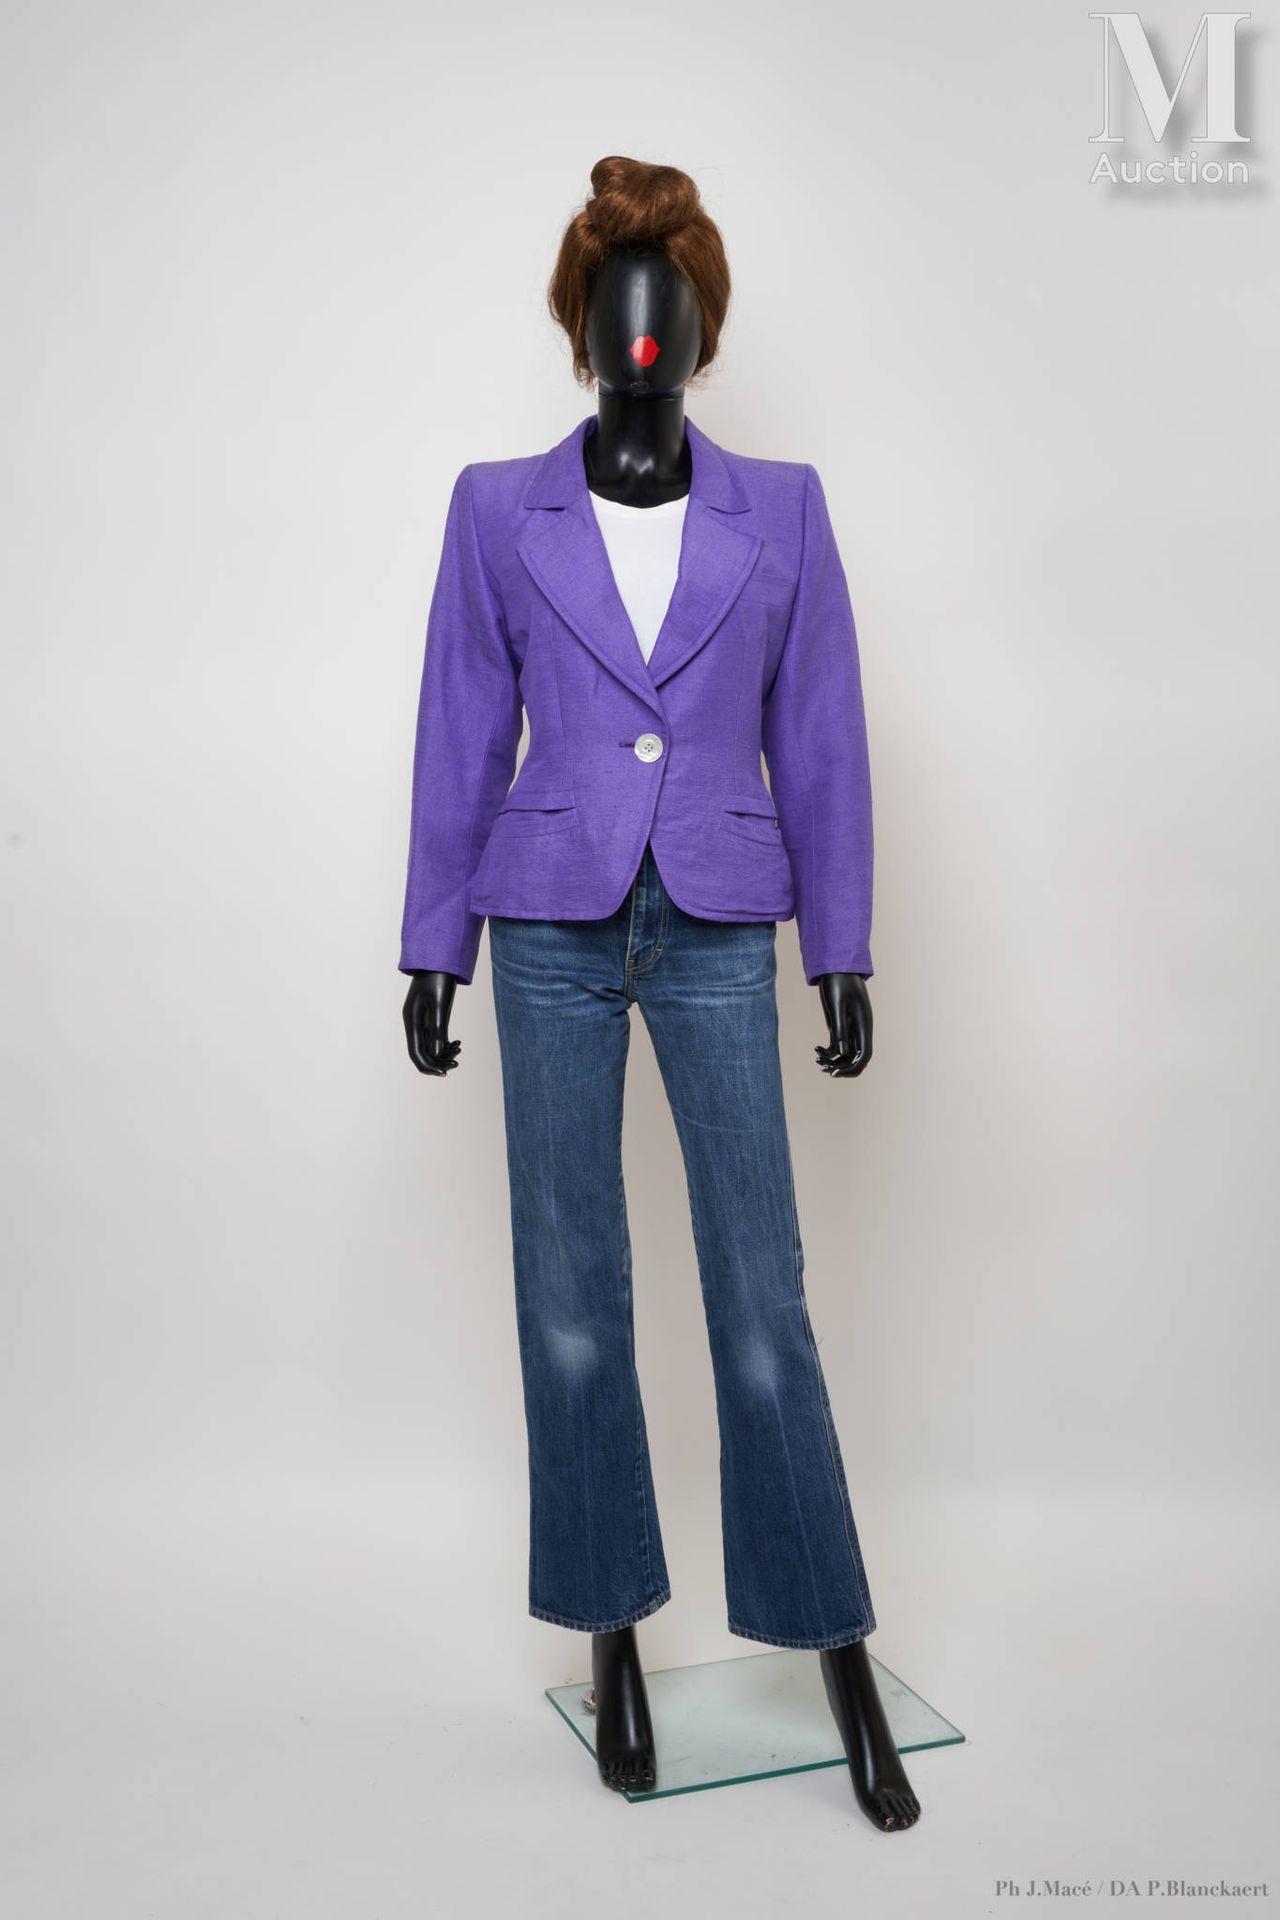 YVES SAINT LAURENT RIVE GAUCHE - 1990's 套装
紫色野生丝混纺：夹克和长裙 
T.42
褪色的效果